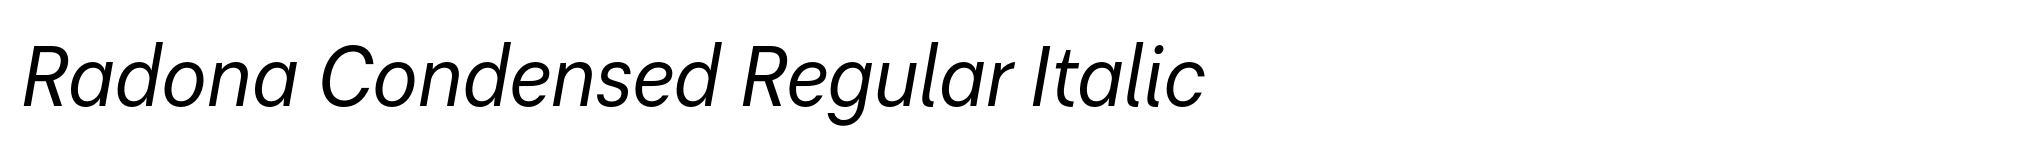 Radona Condensed Regular Italic image